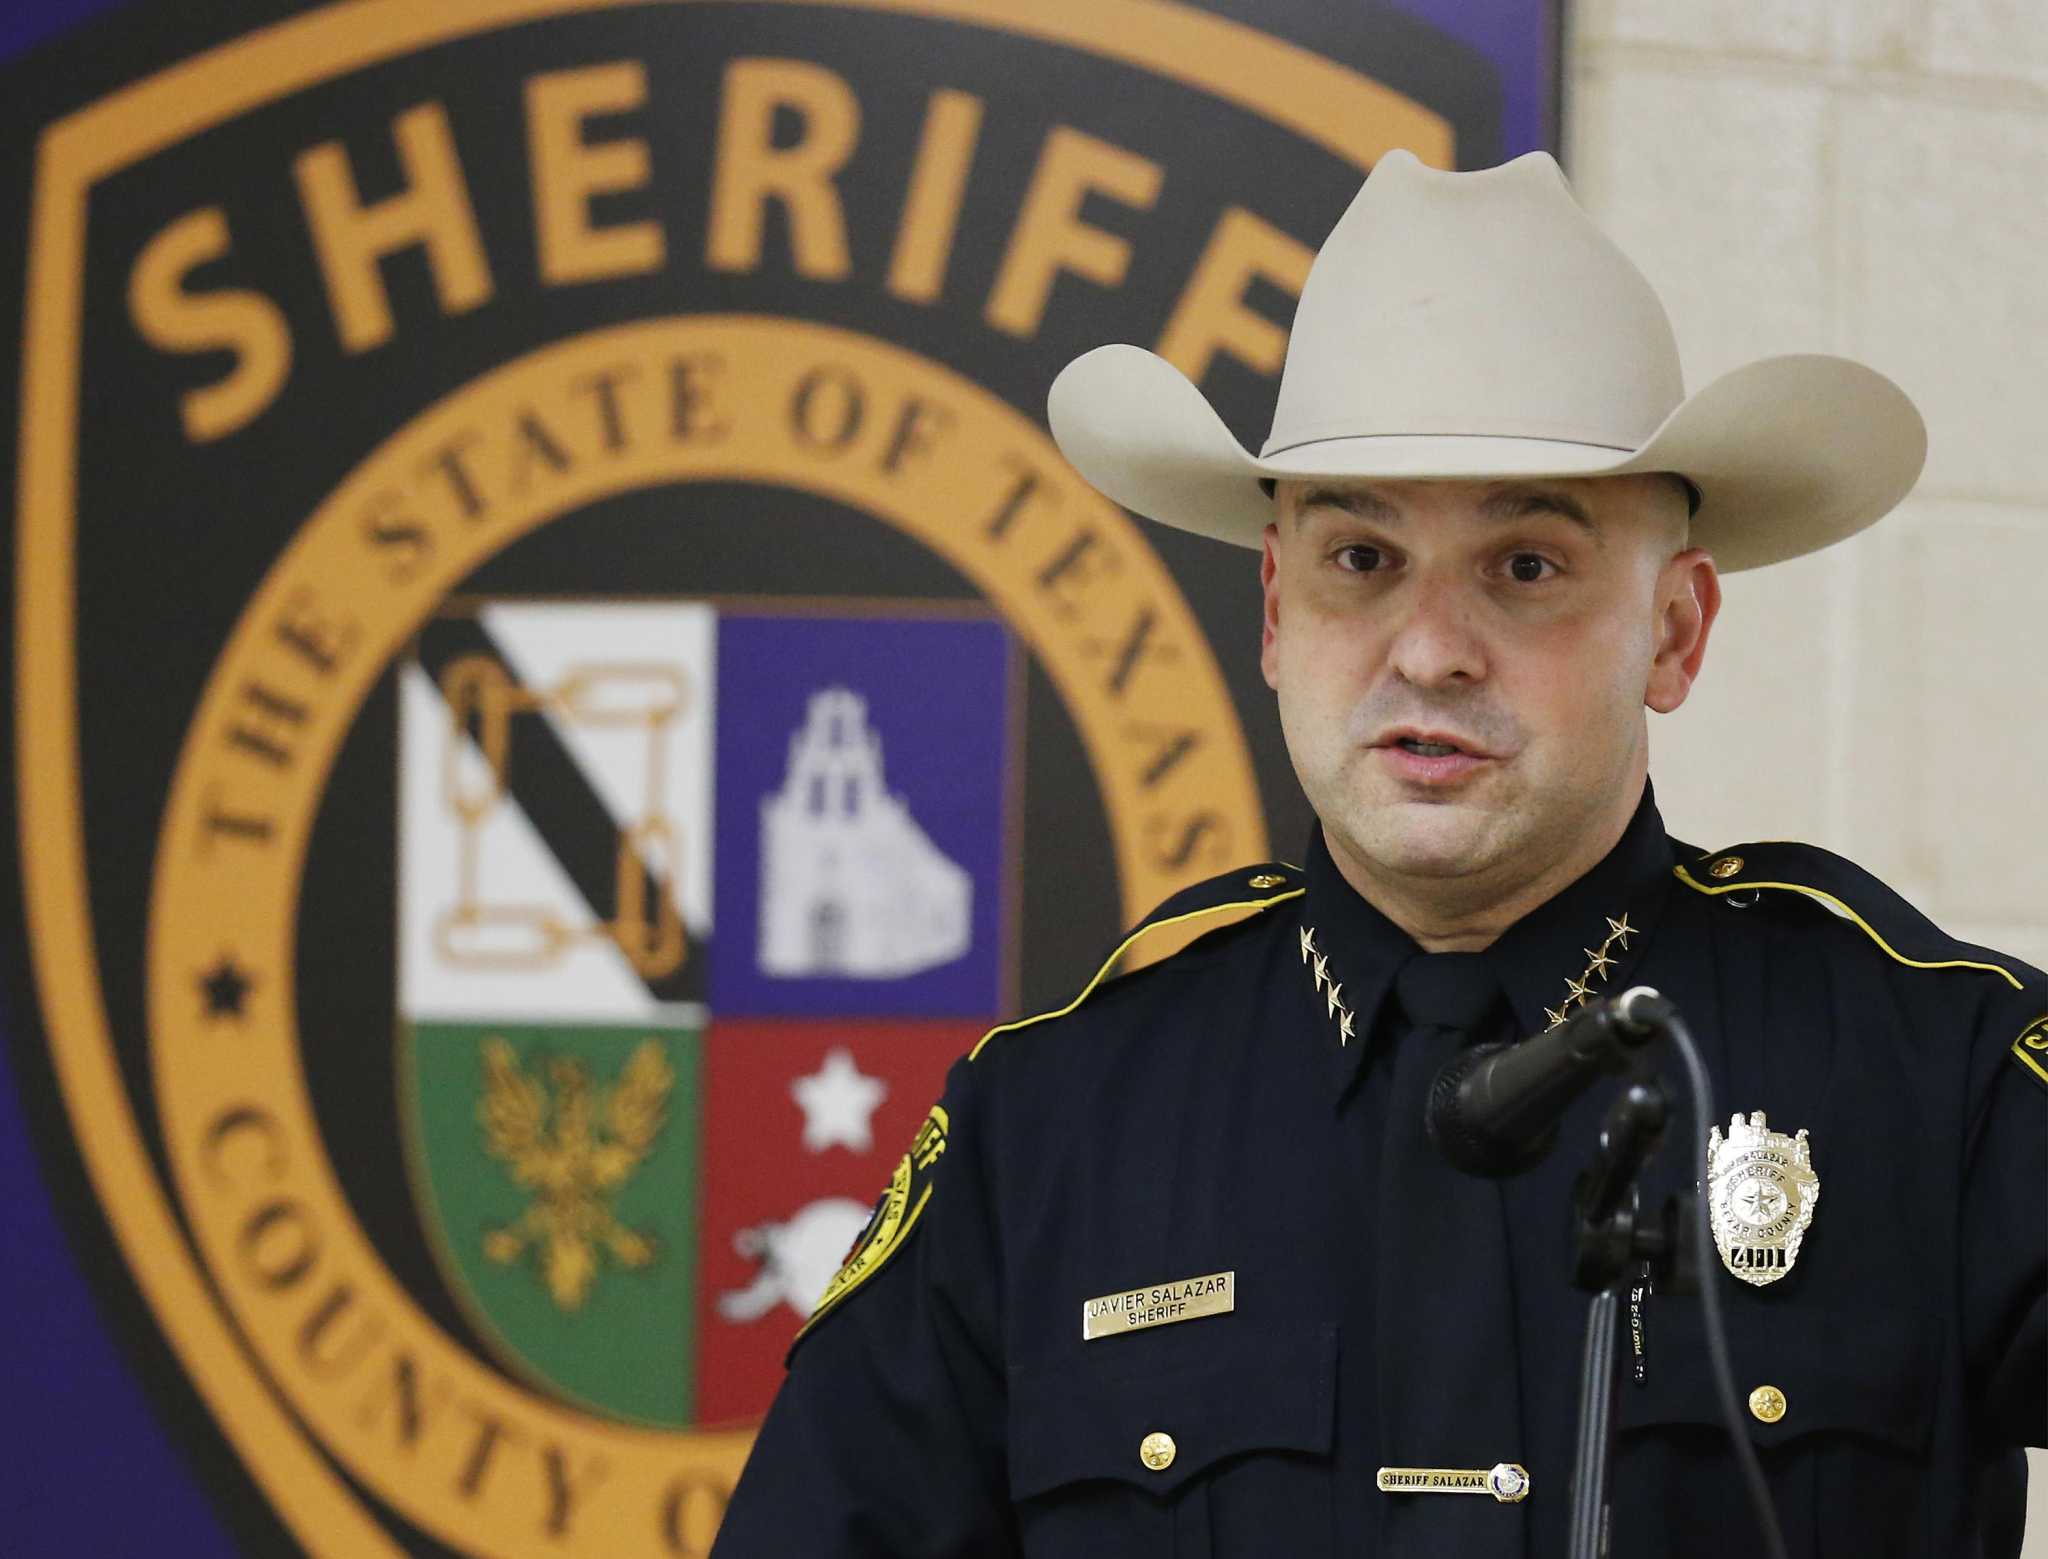 San Antonio City Marshal State Texas Police Sheriff TX